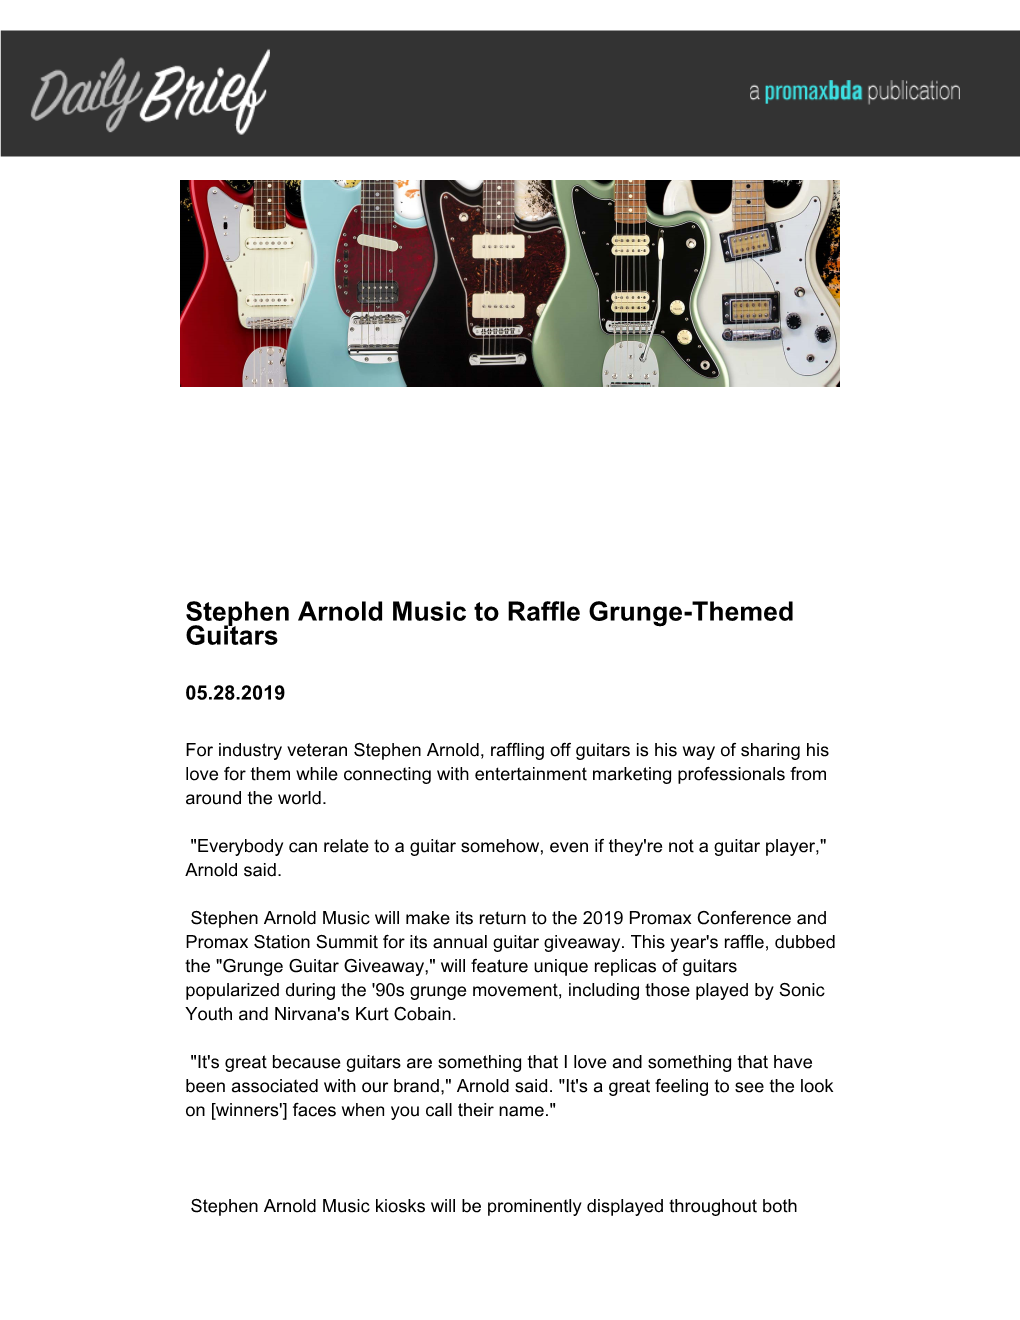 Stephen Arnold Music to Raffle Grunge-Themed Guitars